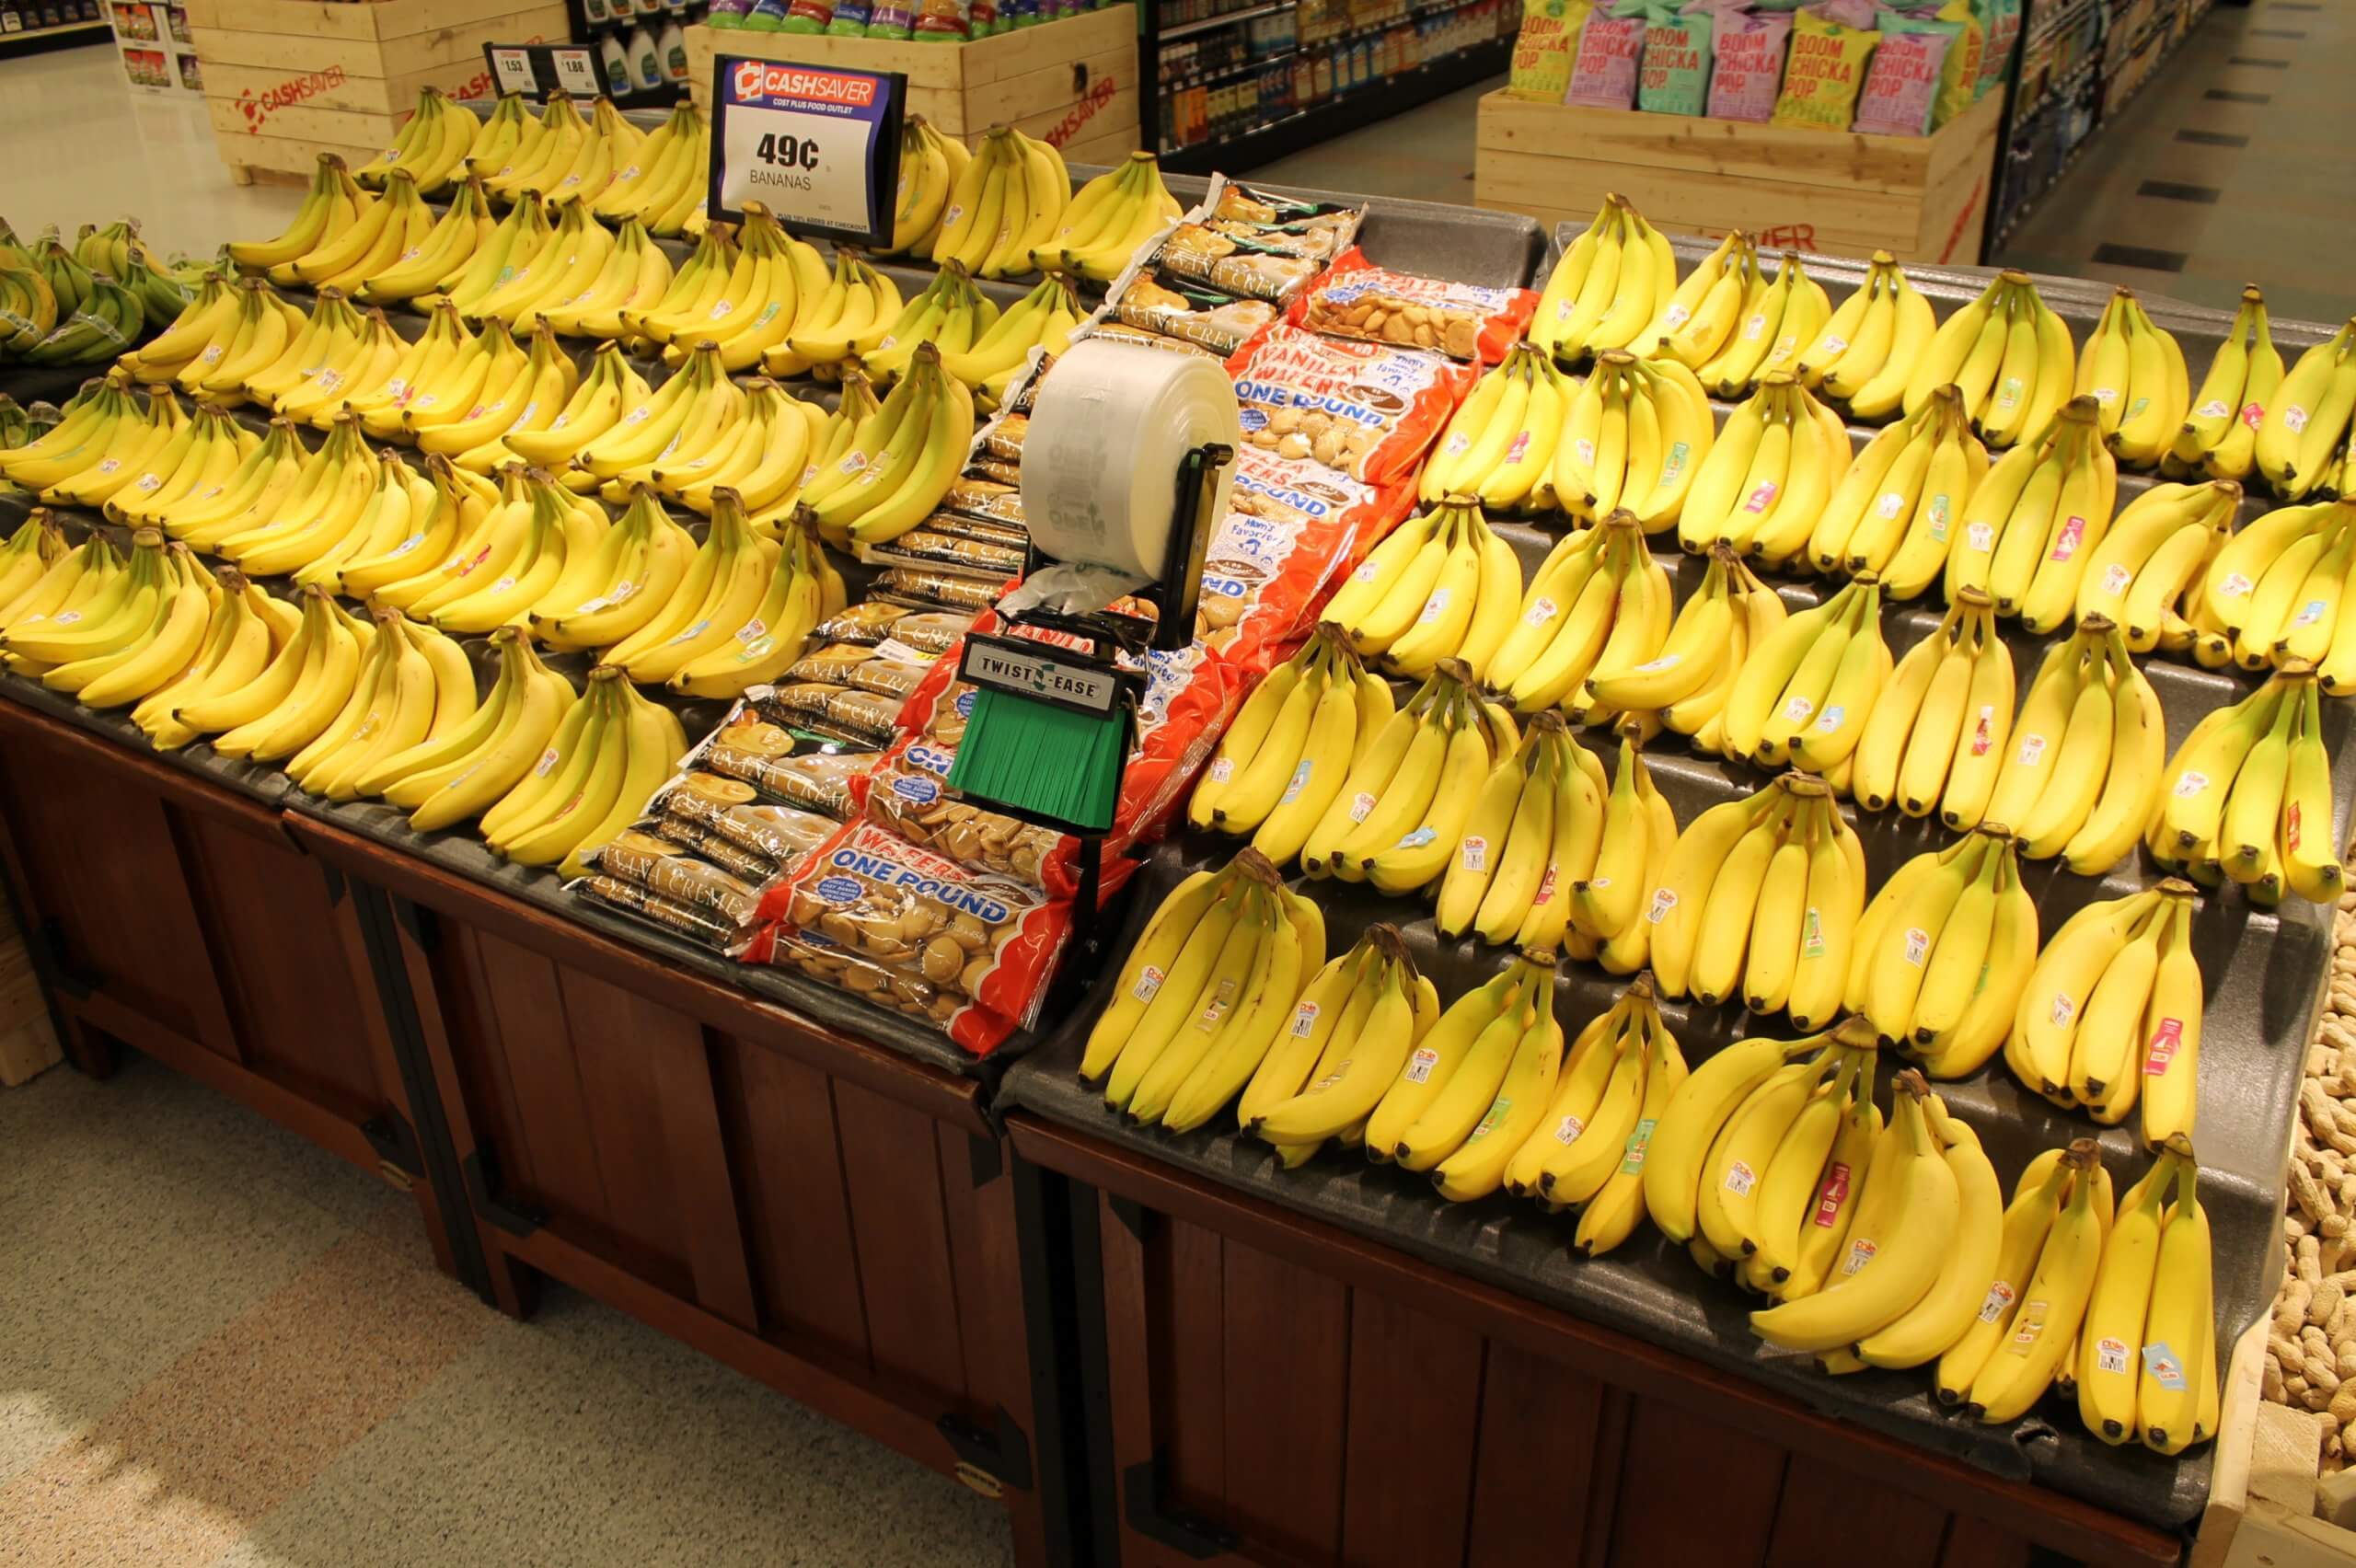 Display of Bananas